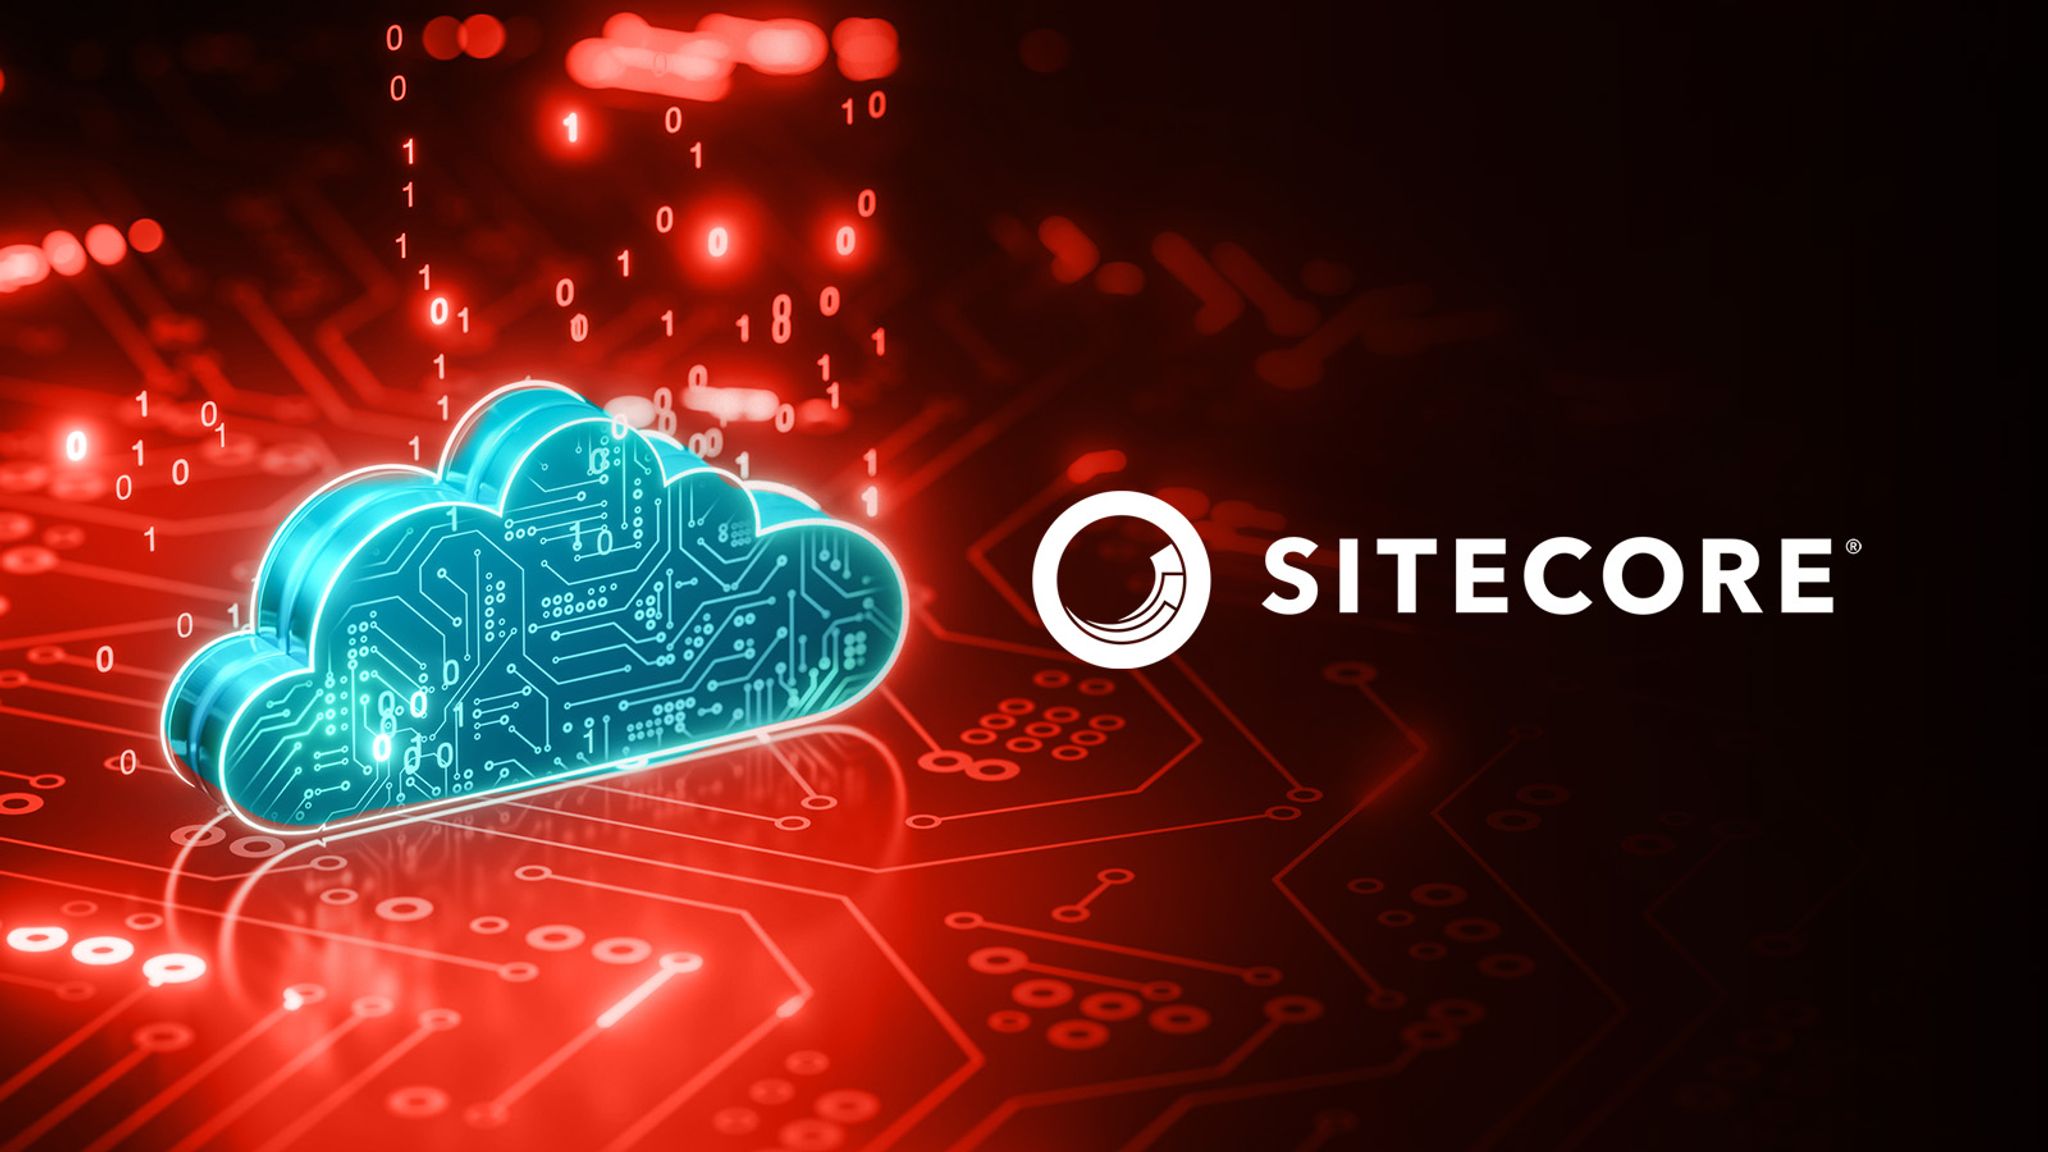 Sitecore logo with cloud illustration